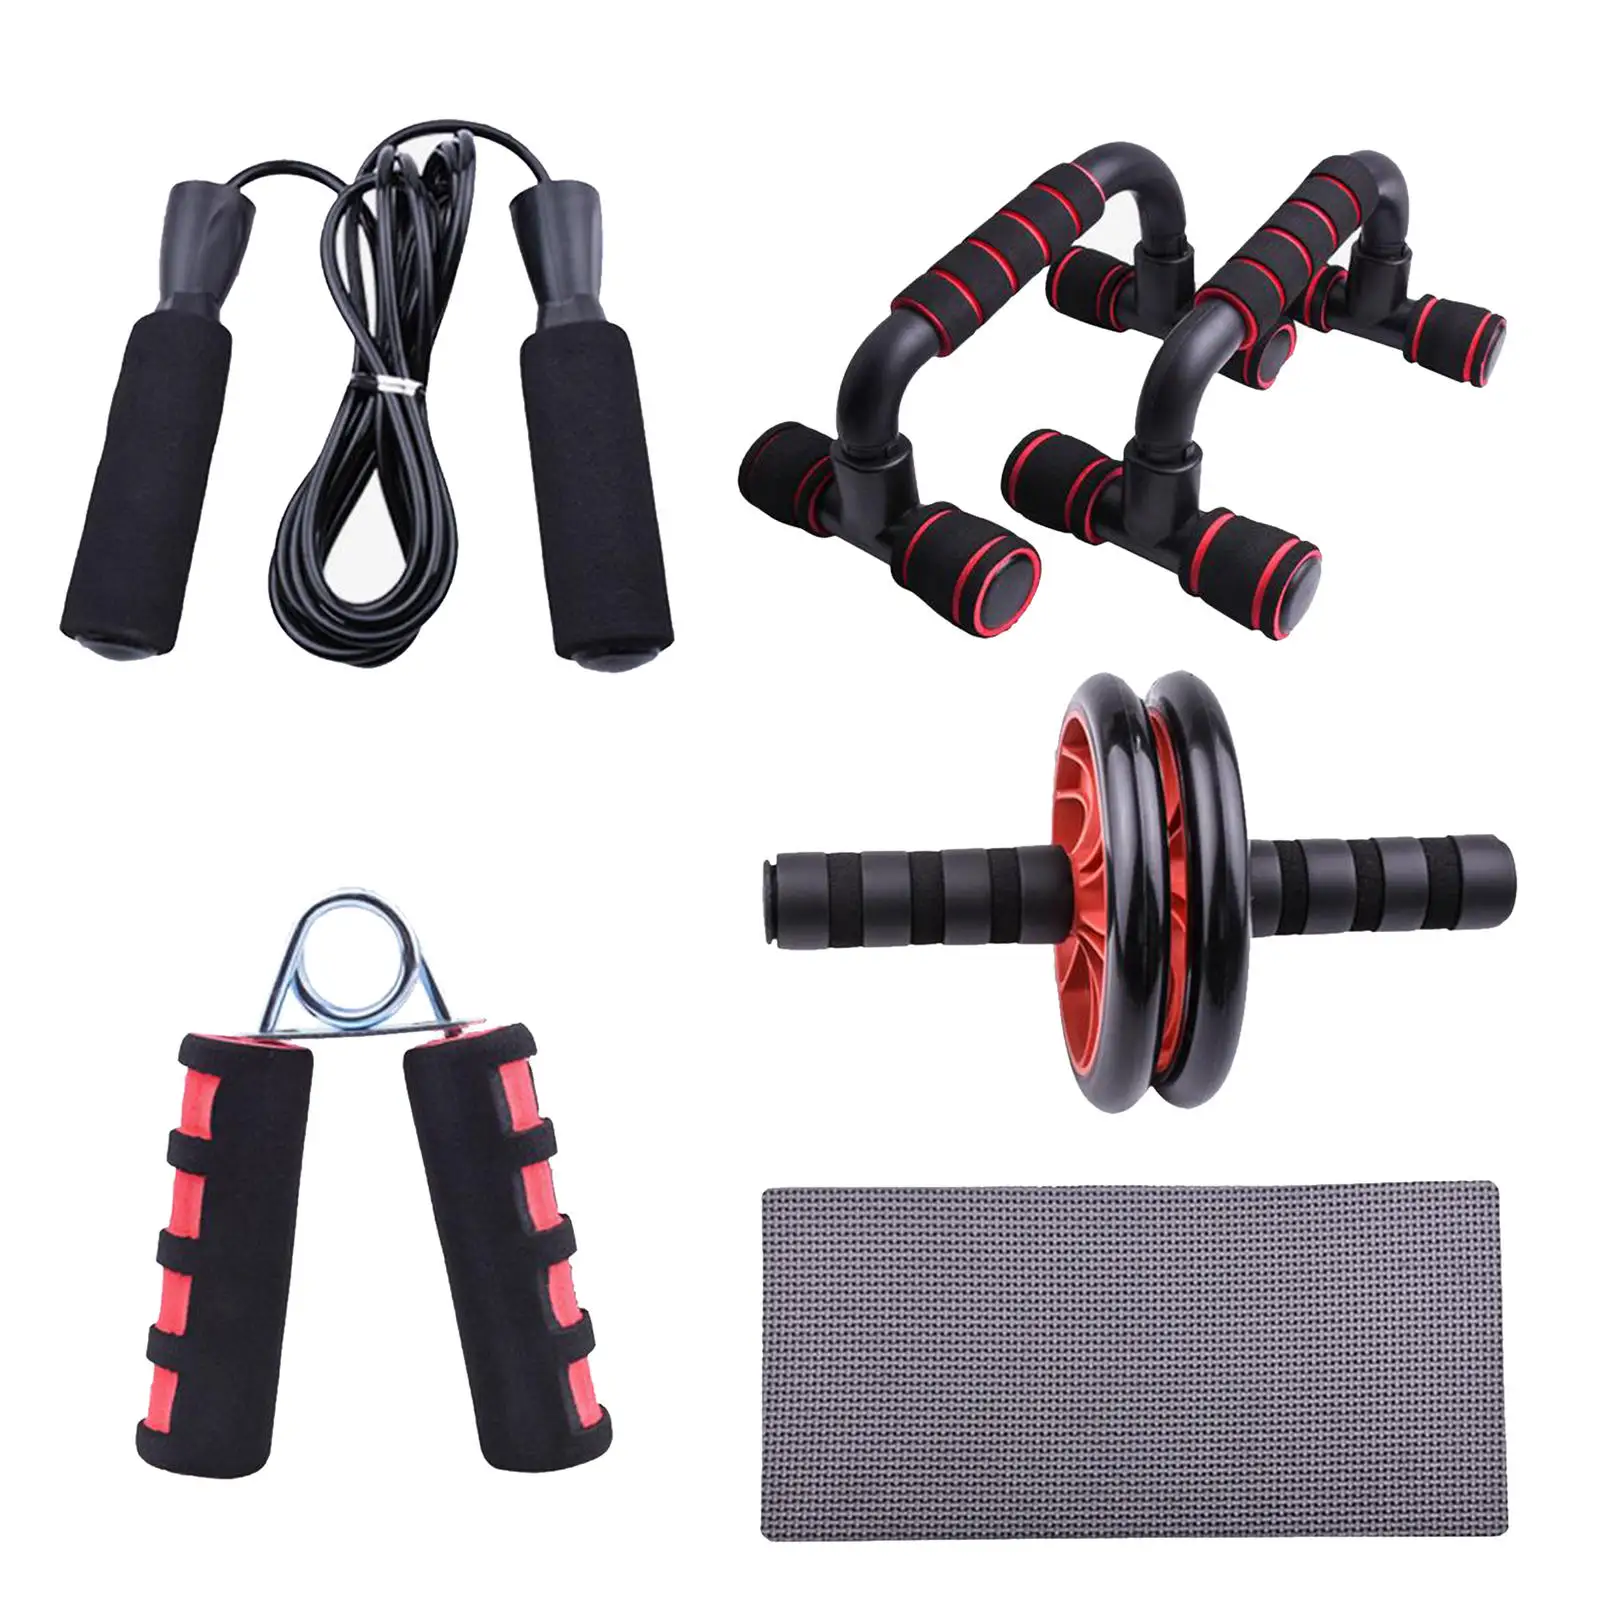 5 In 1 Ab Wheel Roller Kit Set Spring Rope Press Push Up Bar Home Workout Gym